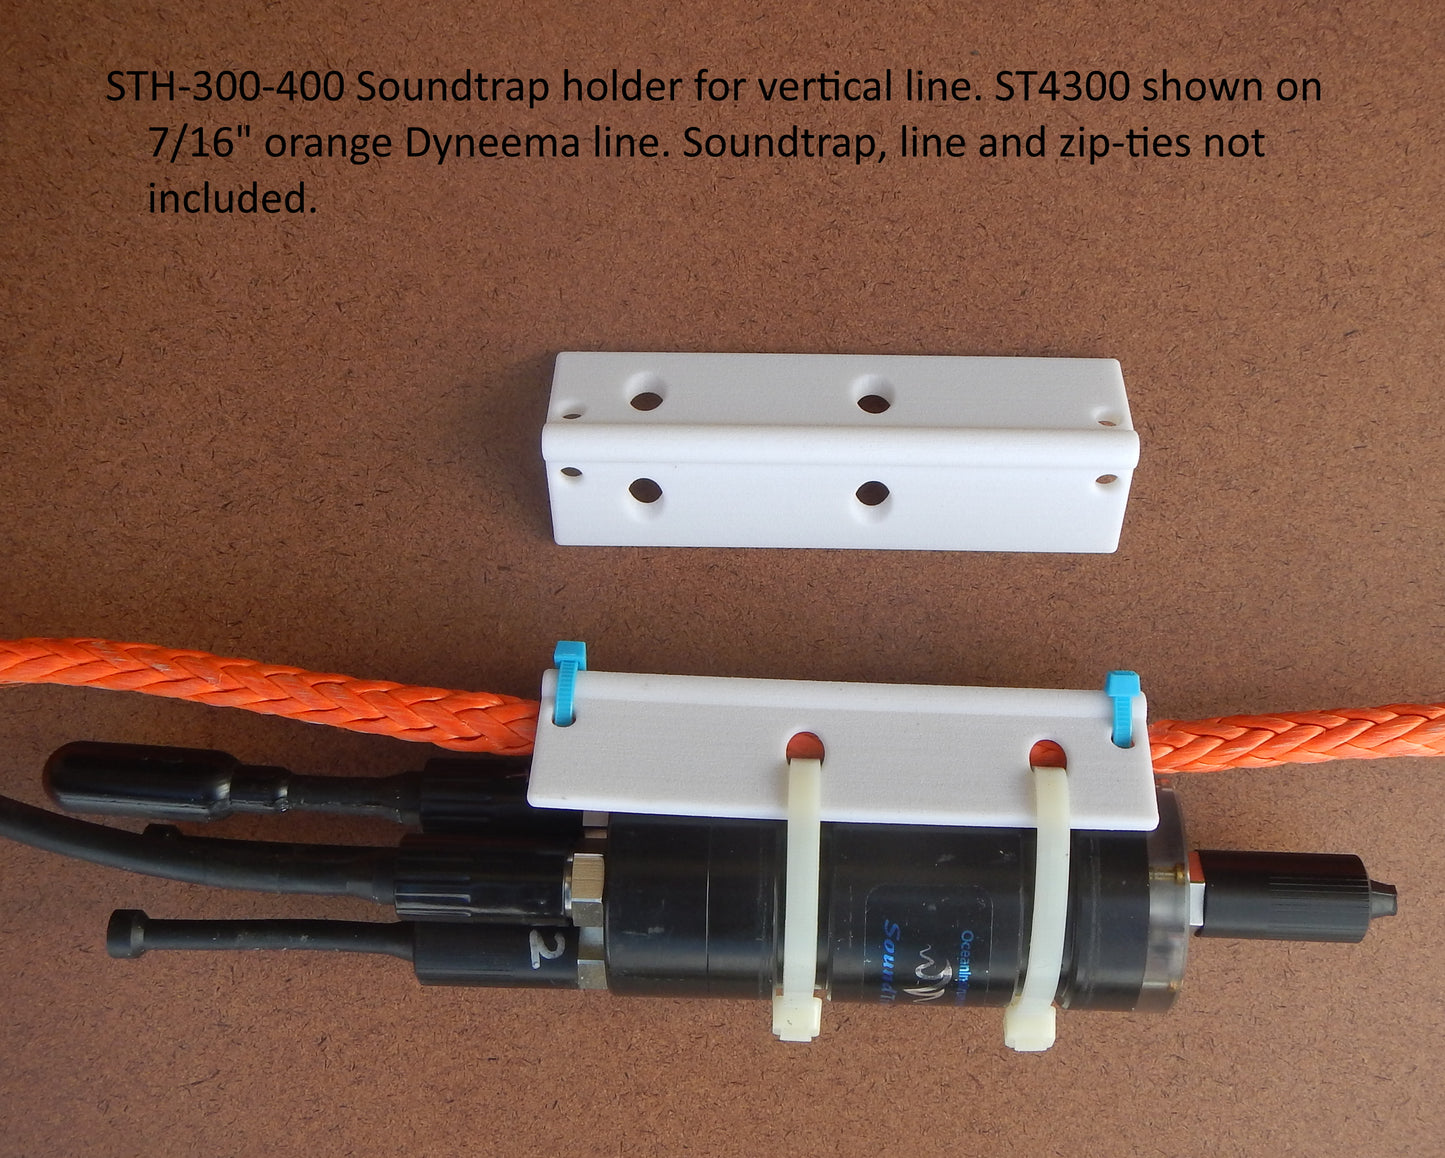 STH-300-400 Soundtrap holder for vertical hydrophone array